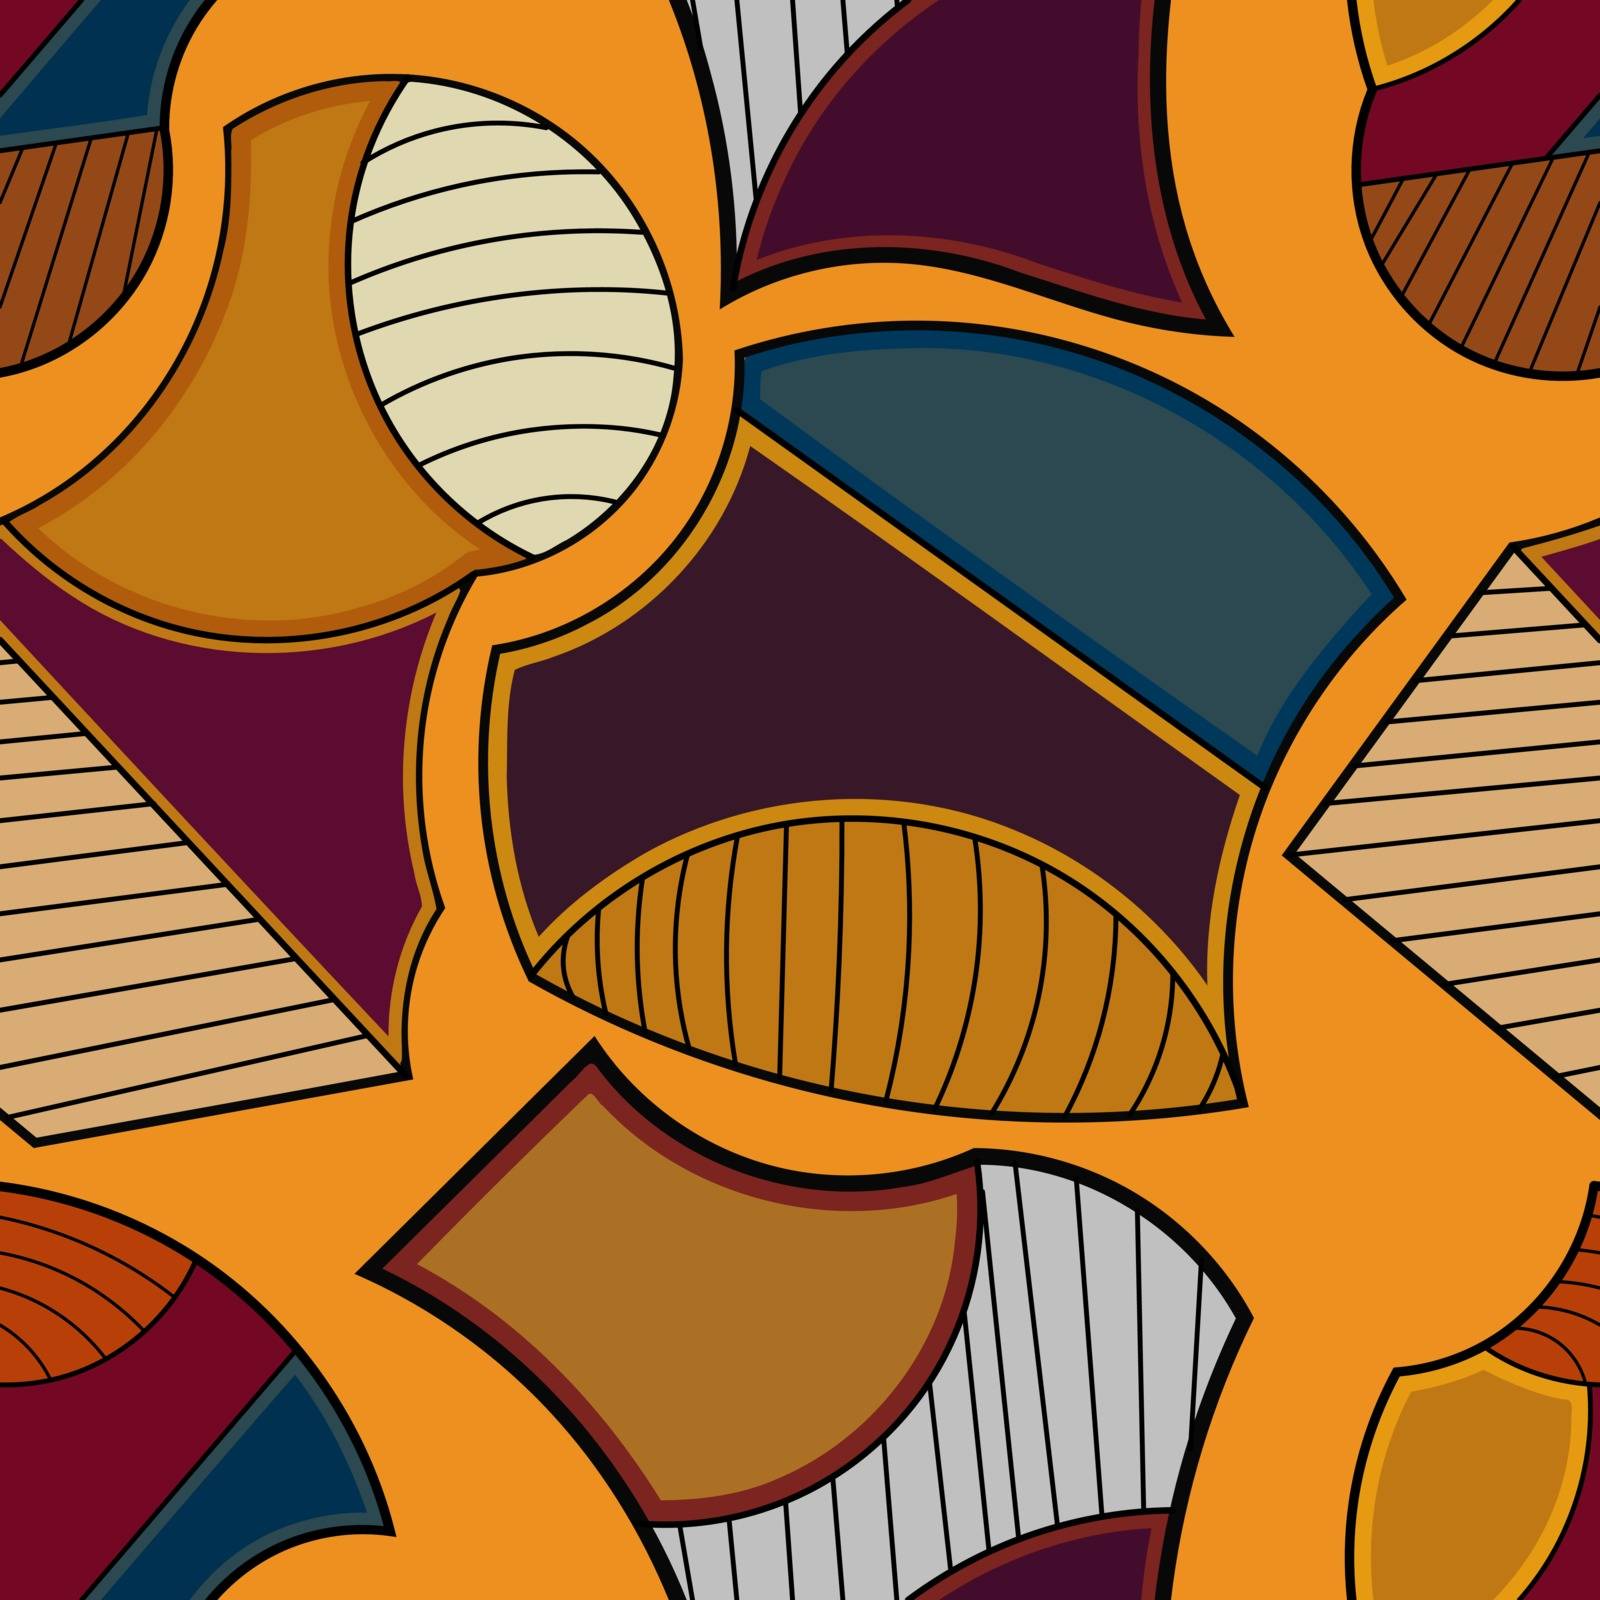 Seamless geometric pattern on an orange background by Larser